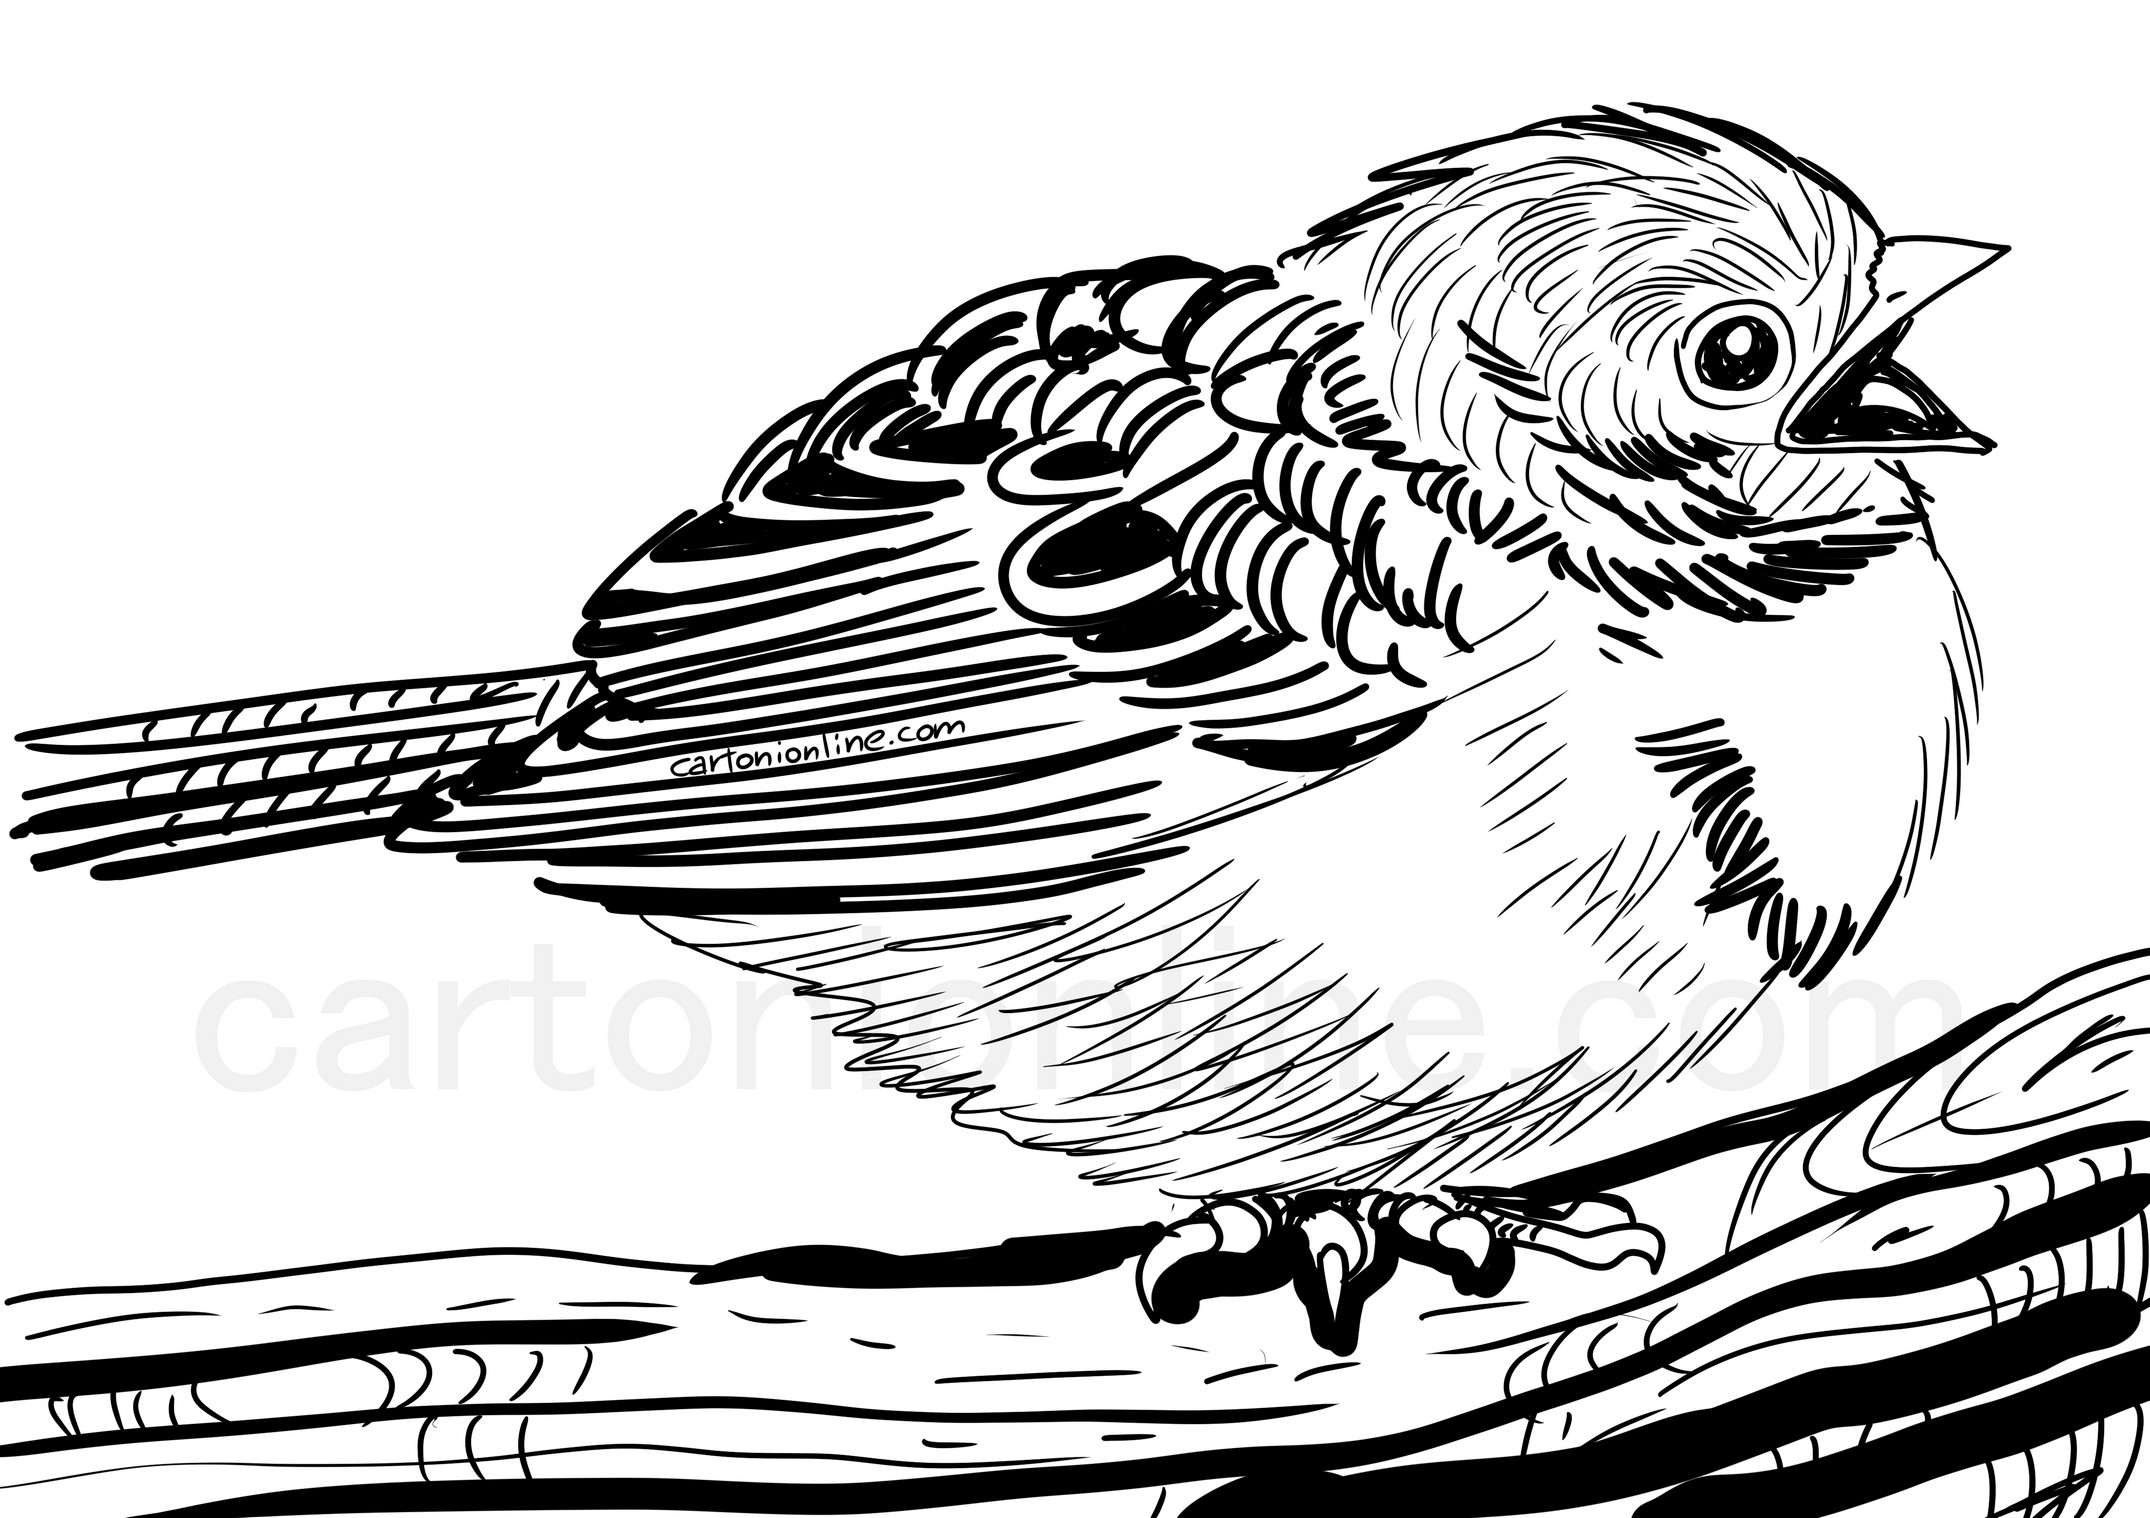 Sparrow chick målarbok